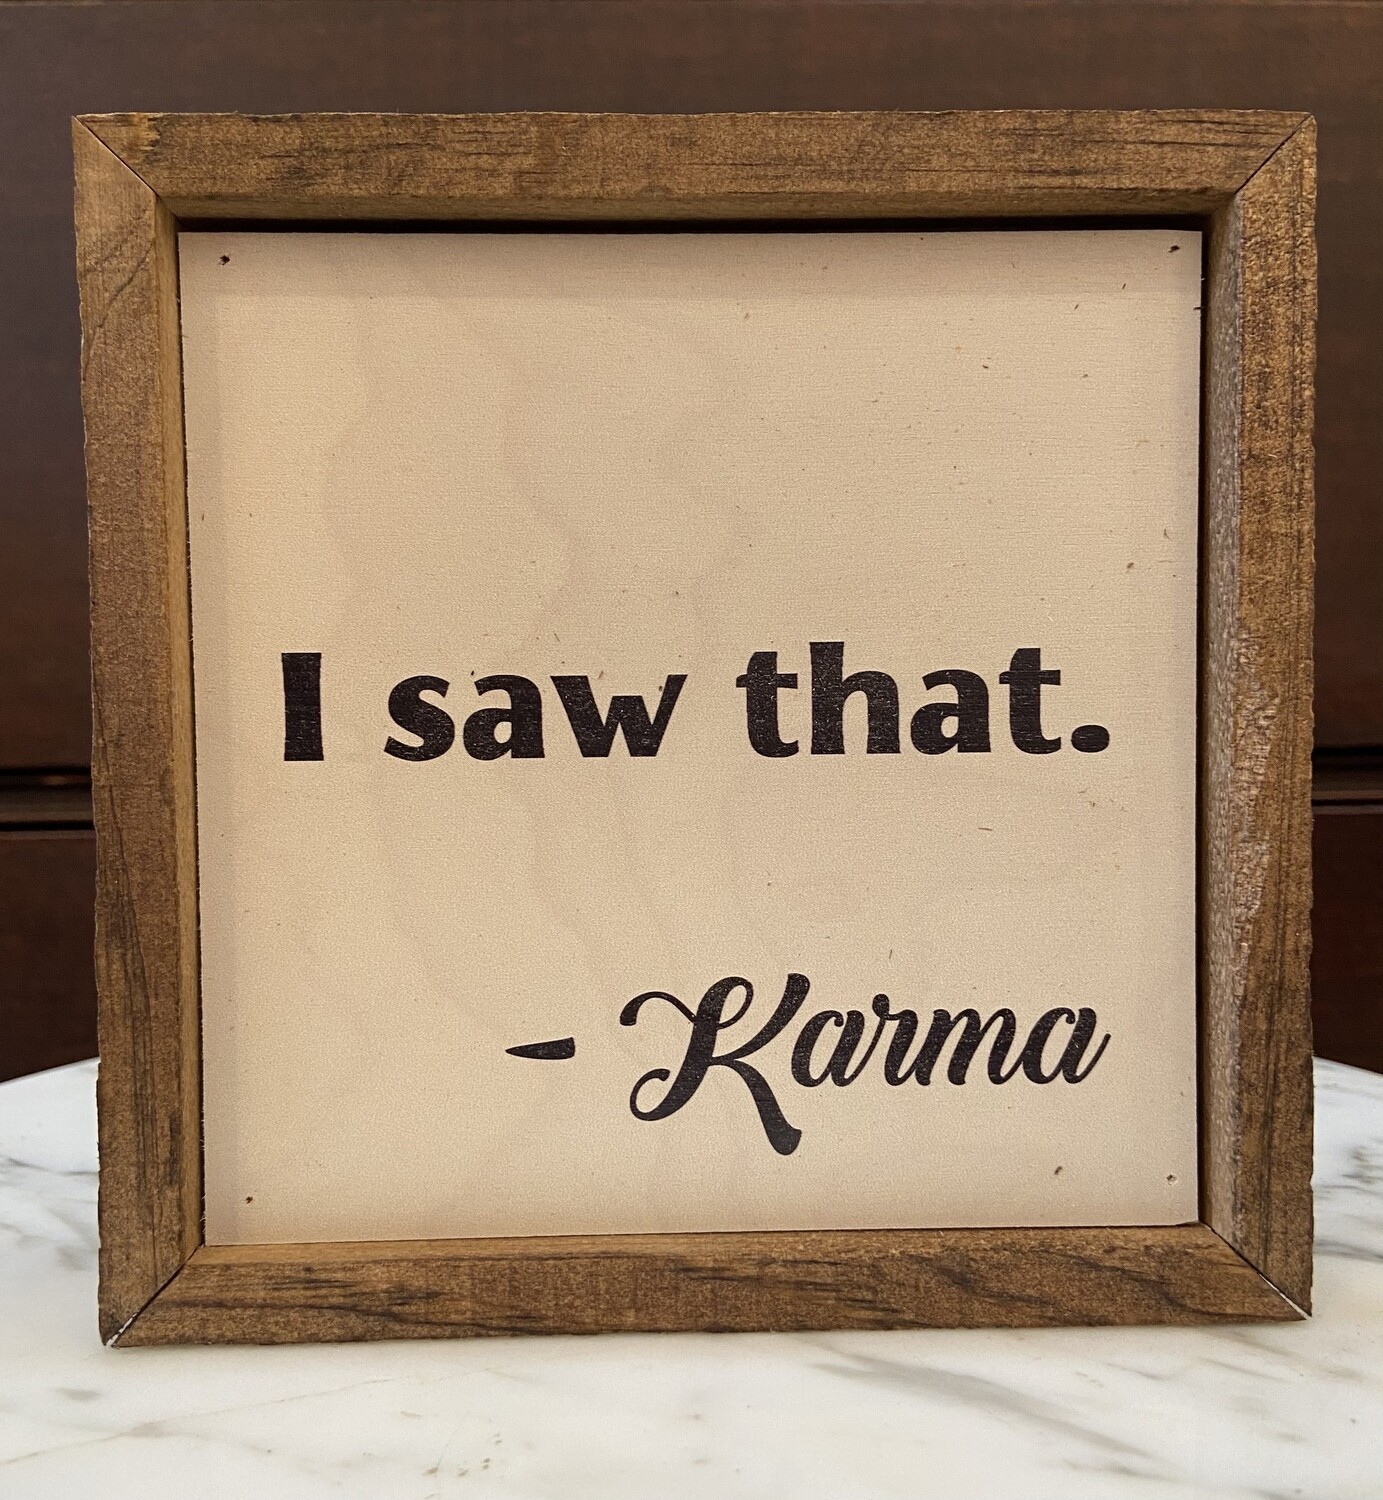 I Saw That. Karma Wall Sign 6x6